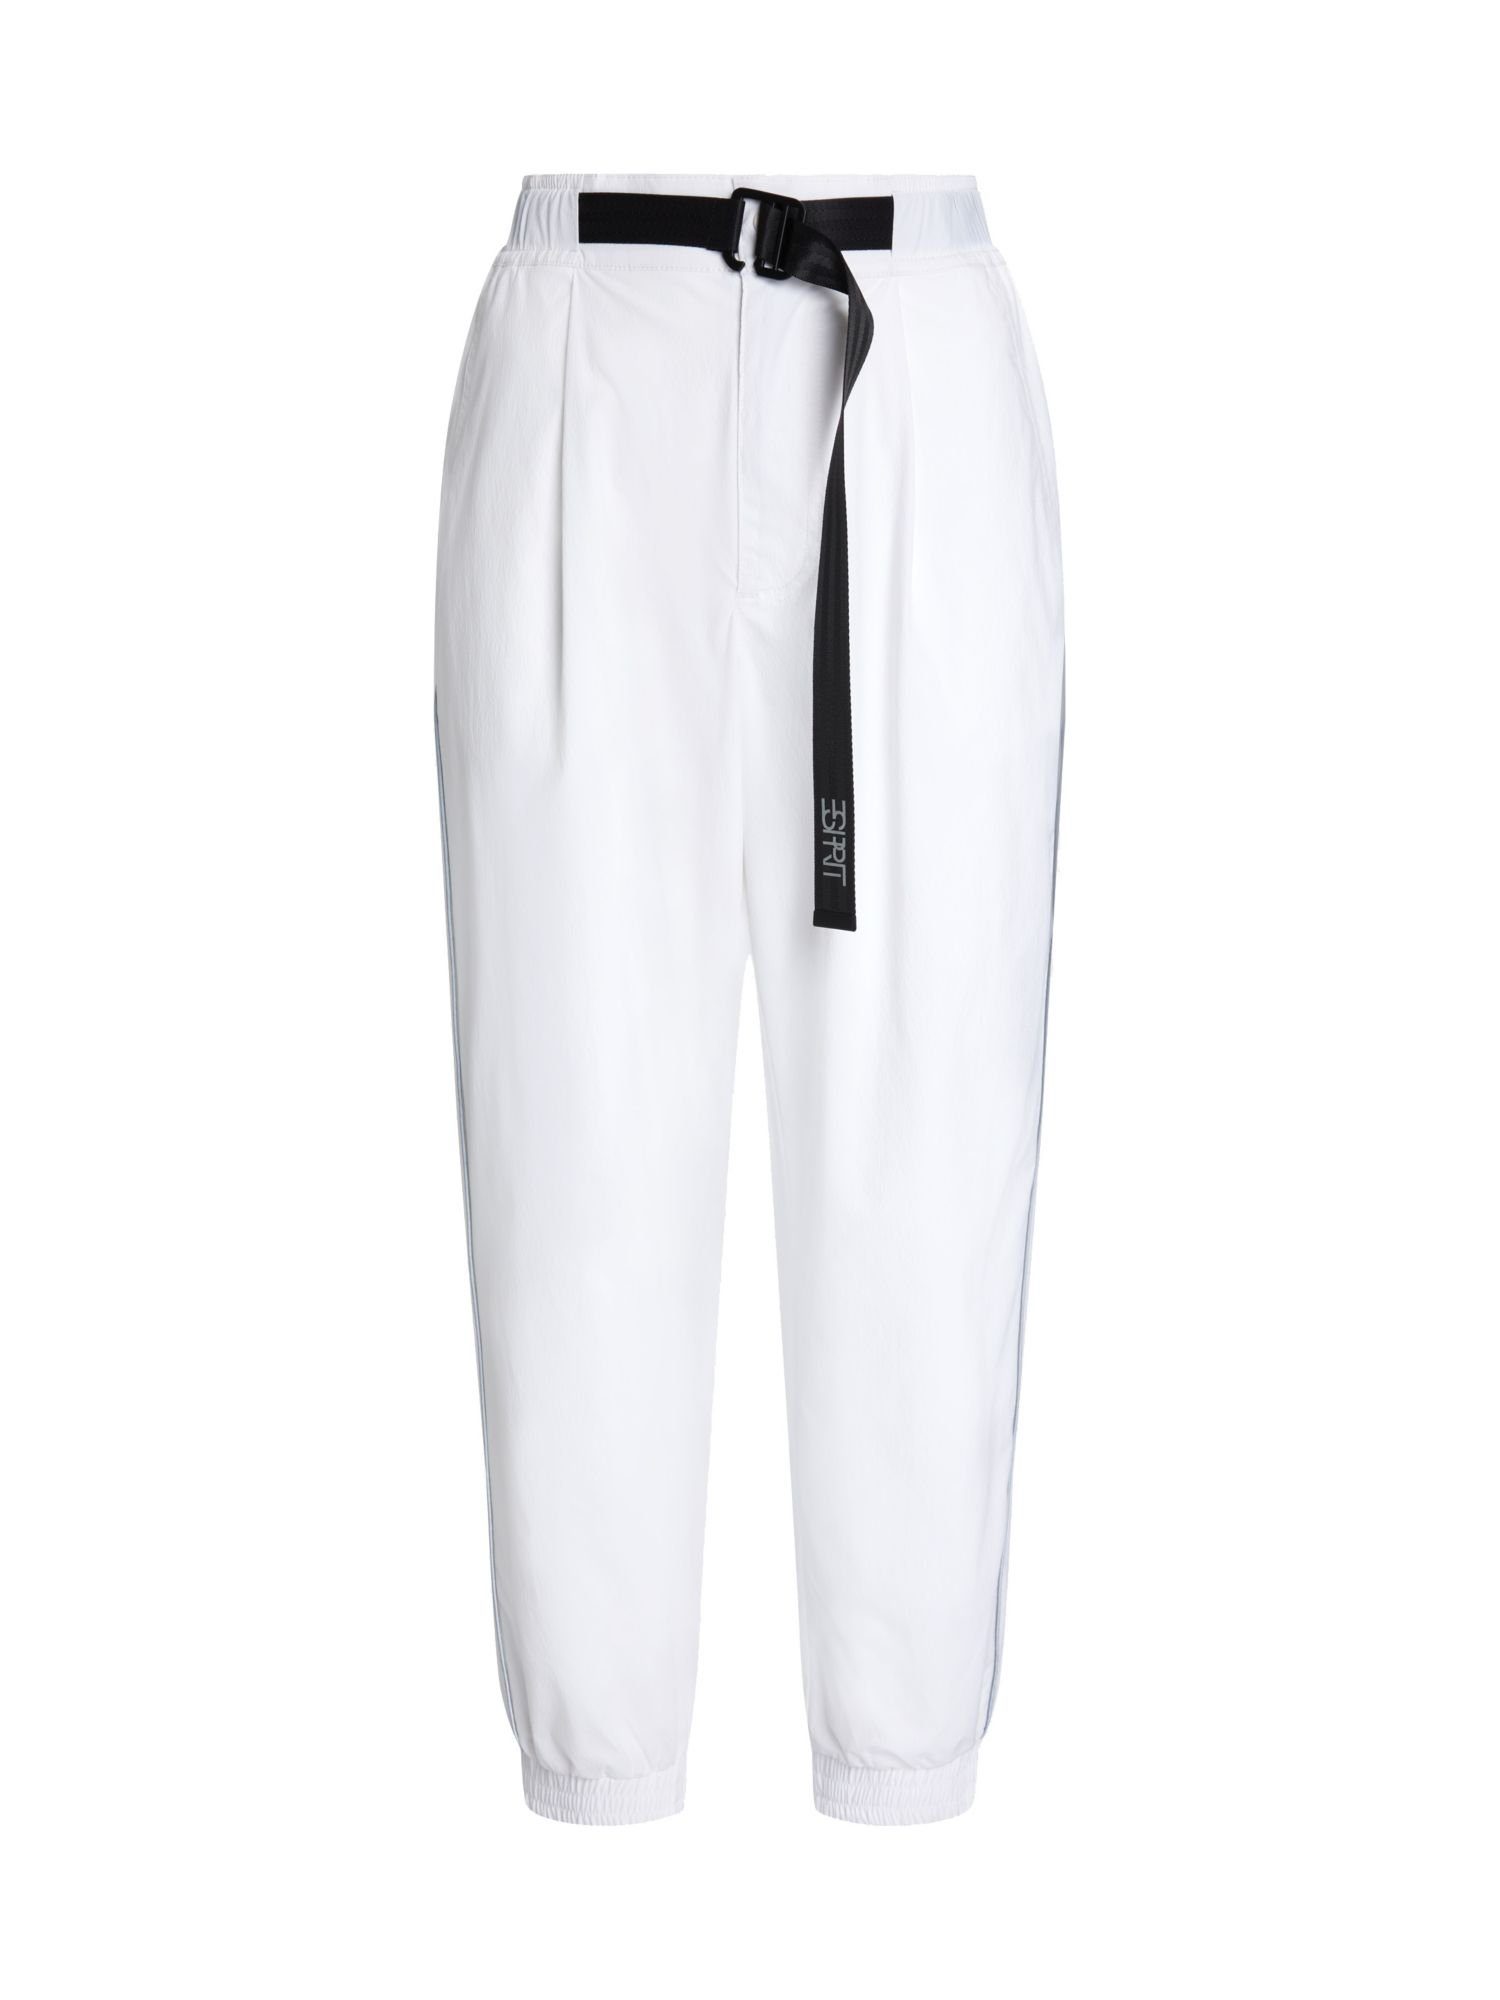 WHITE Esprit Jogger Jogger-Style Pants im Gürtelschließe High-Rise-Pants mit